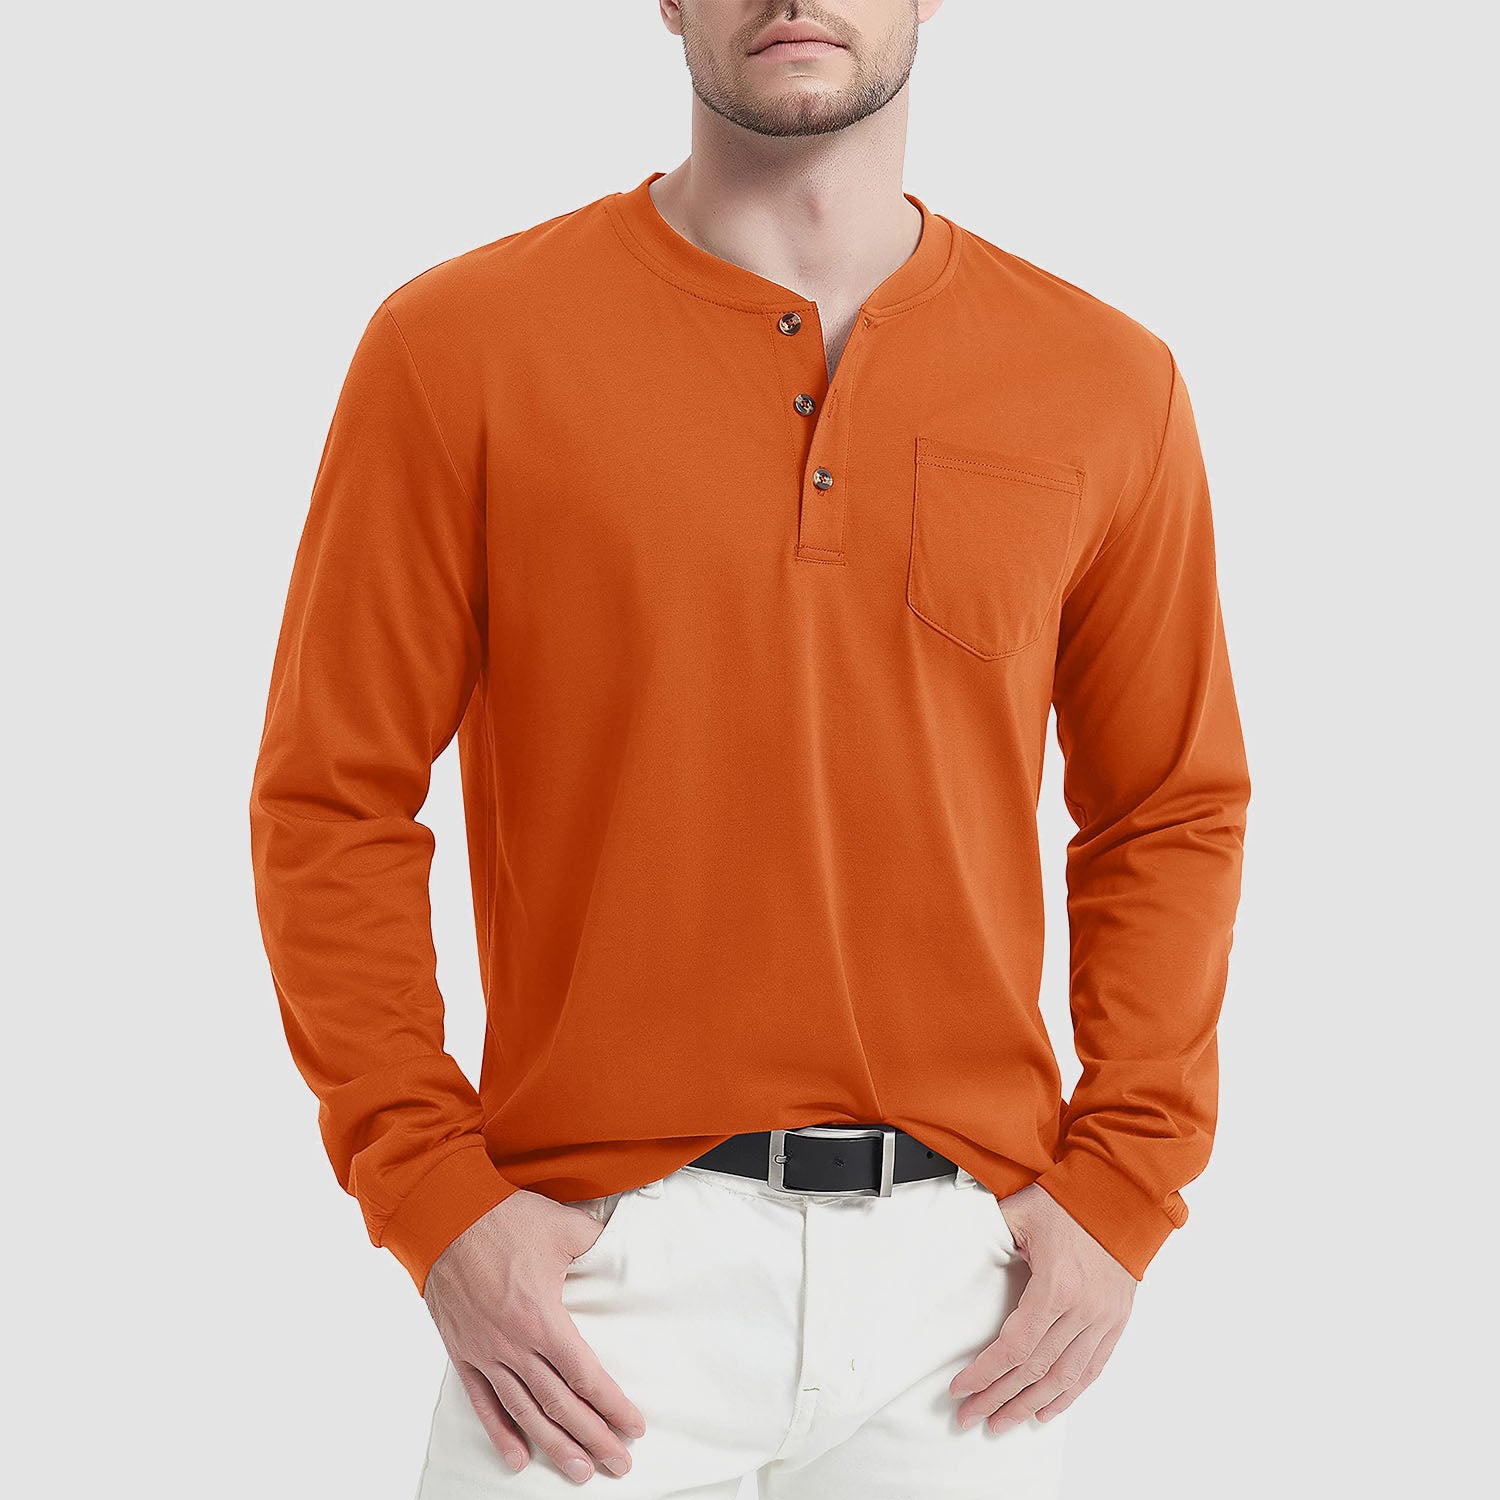 Men's Henley Shirt Cotton Long Sleeve Shirts